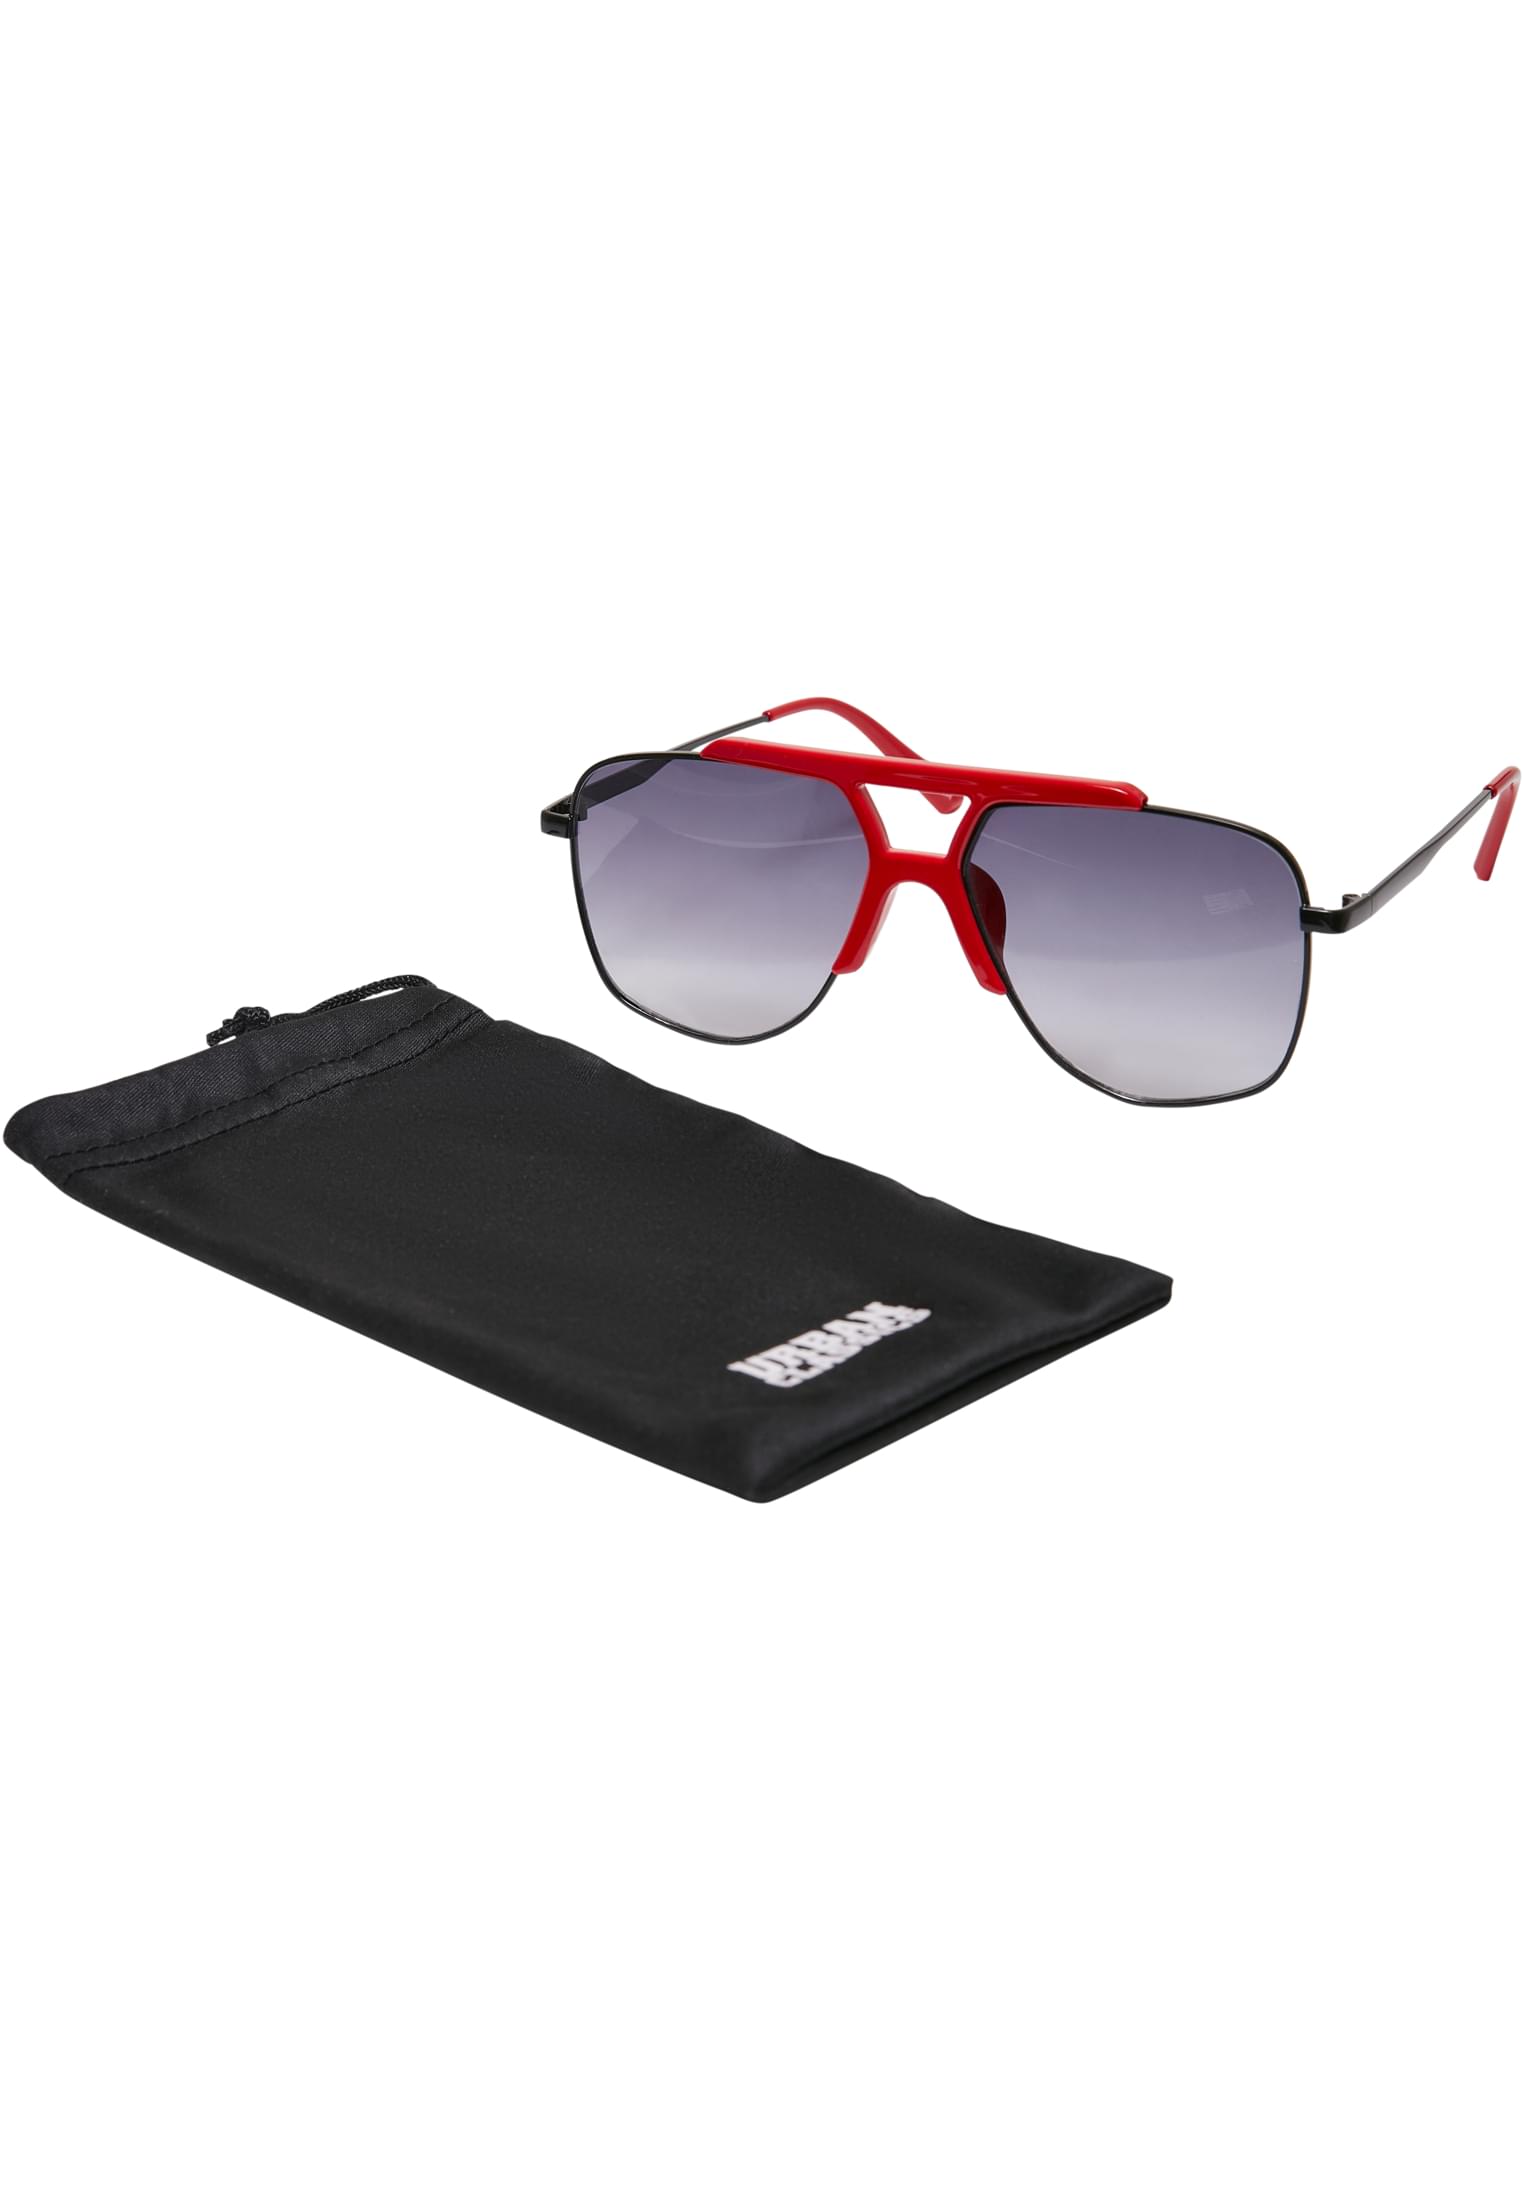 Saint Tropez sunglasses huge red/black